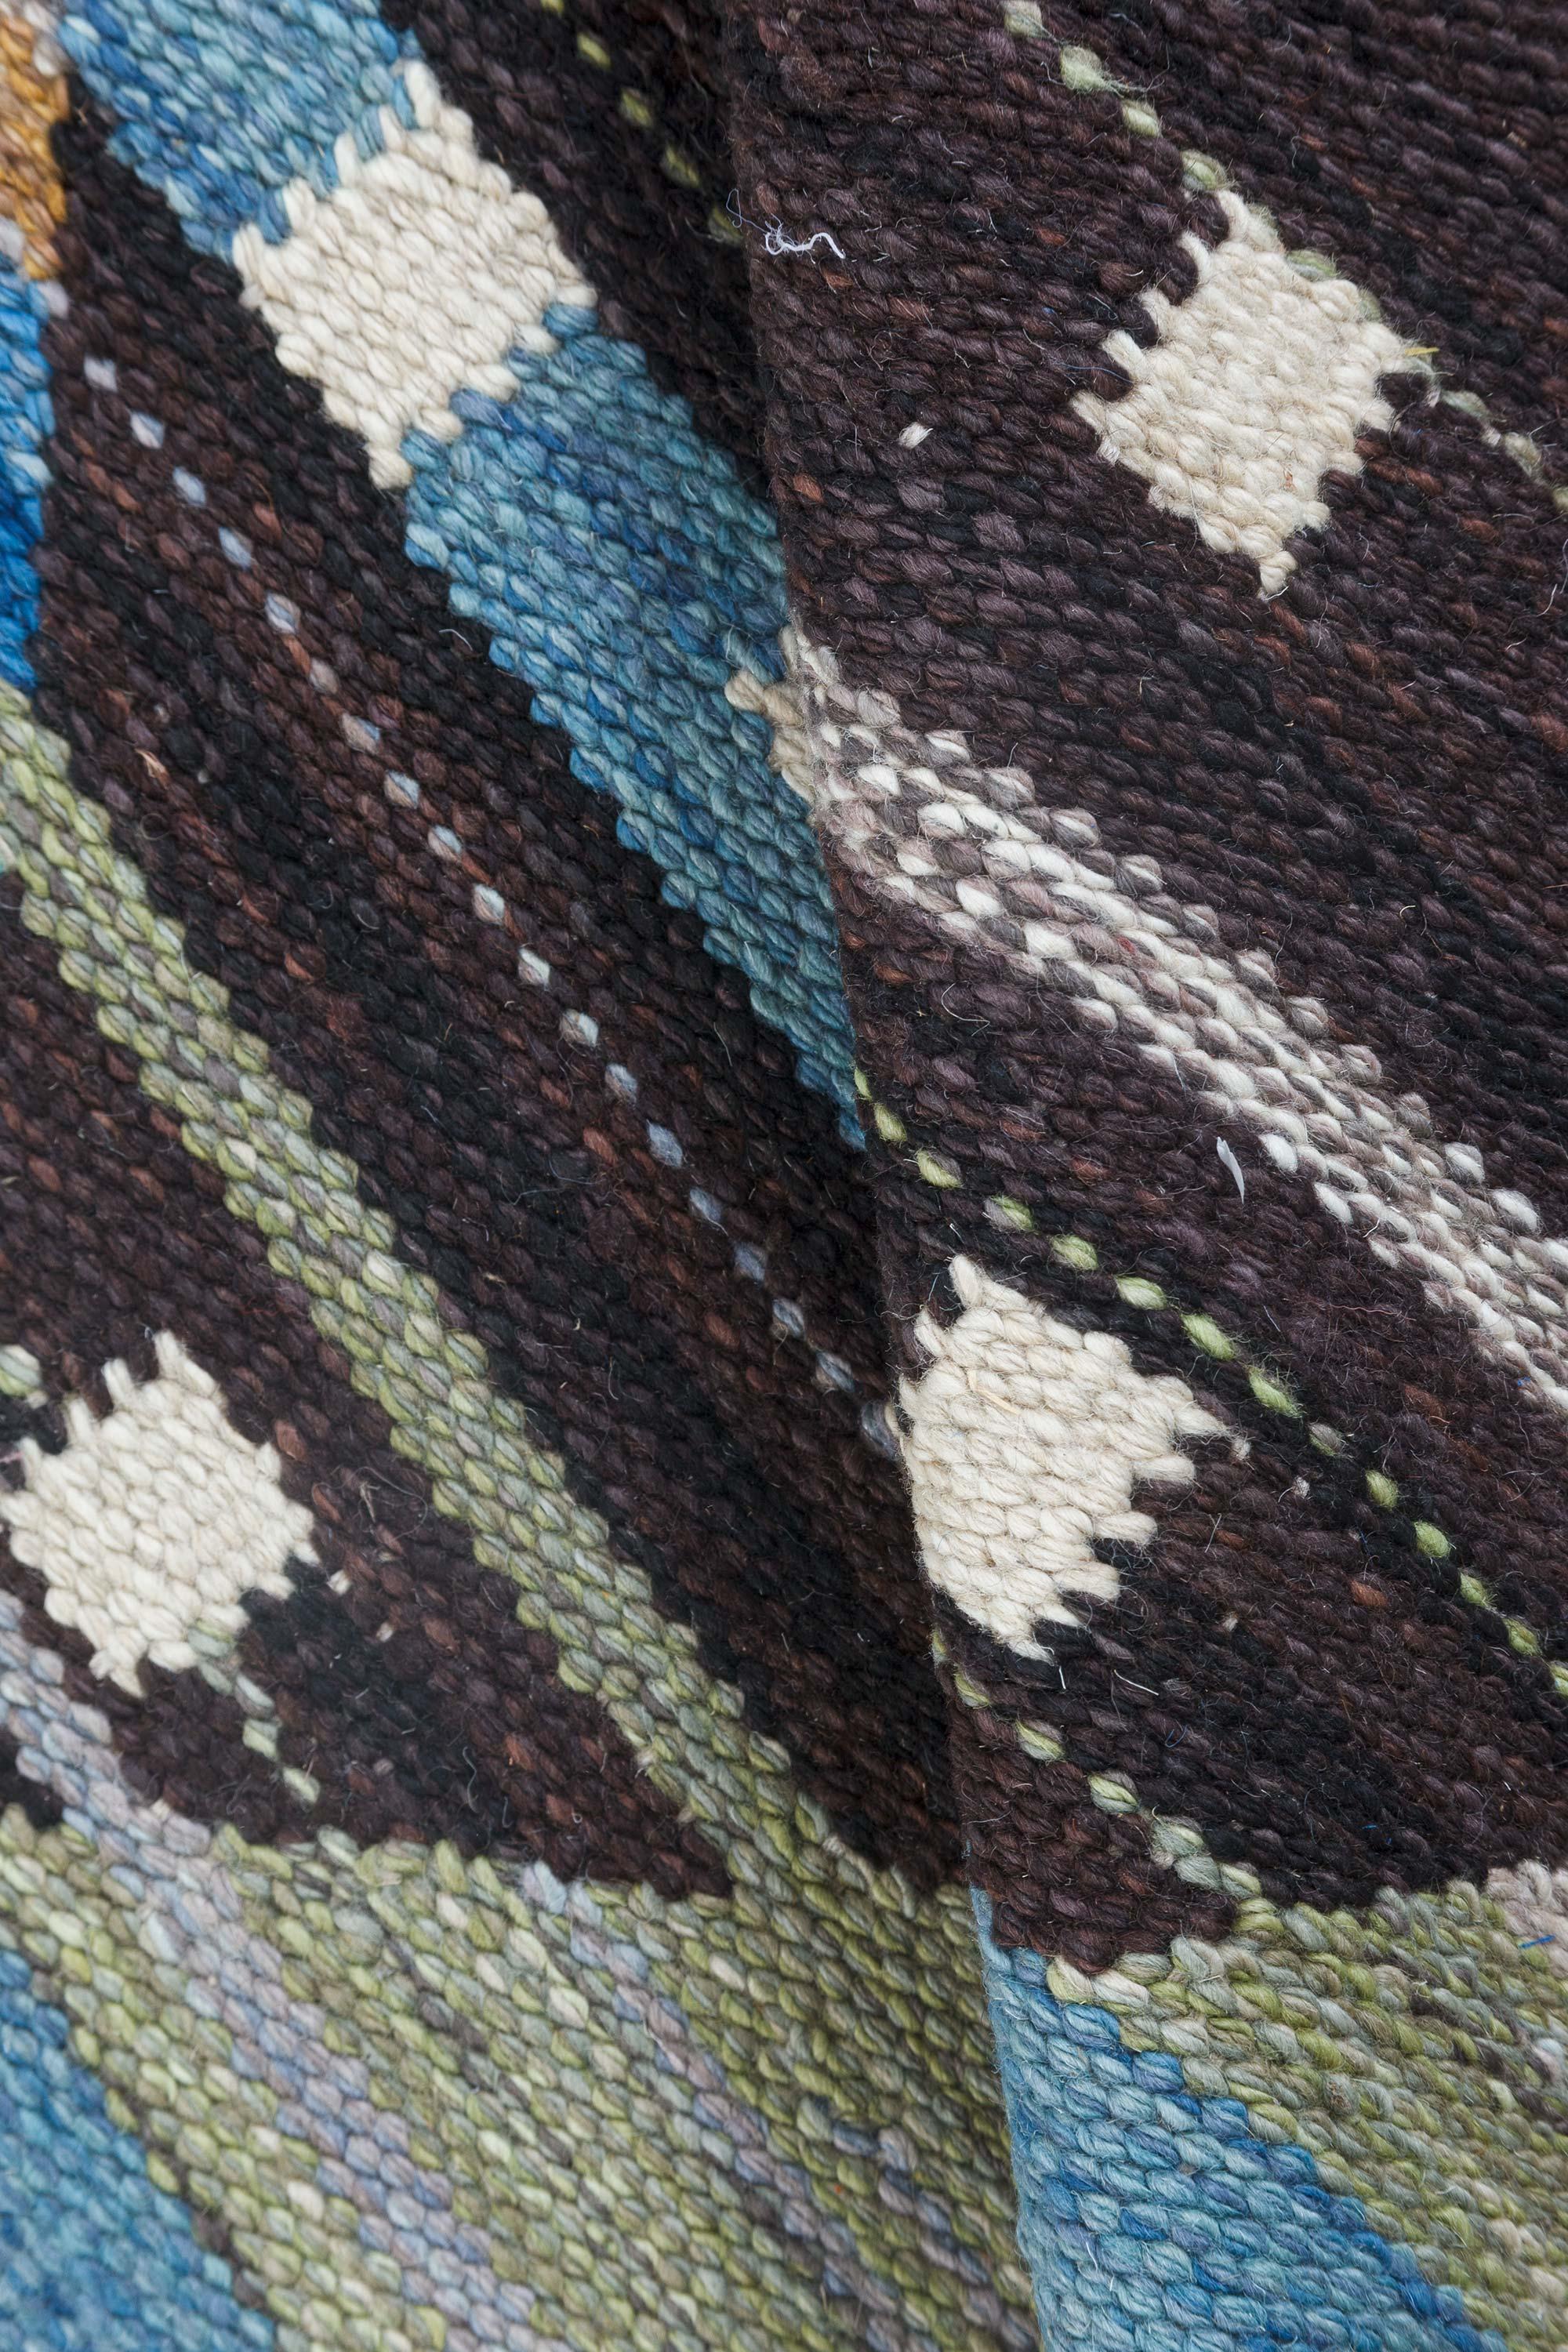 High-Quality Swedish design flat-weave wool rug by Doris Leslie Blau.
Size: 8'0